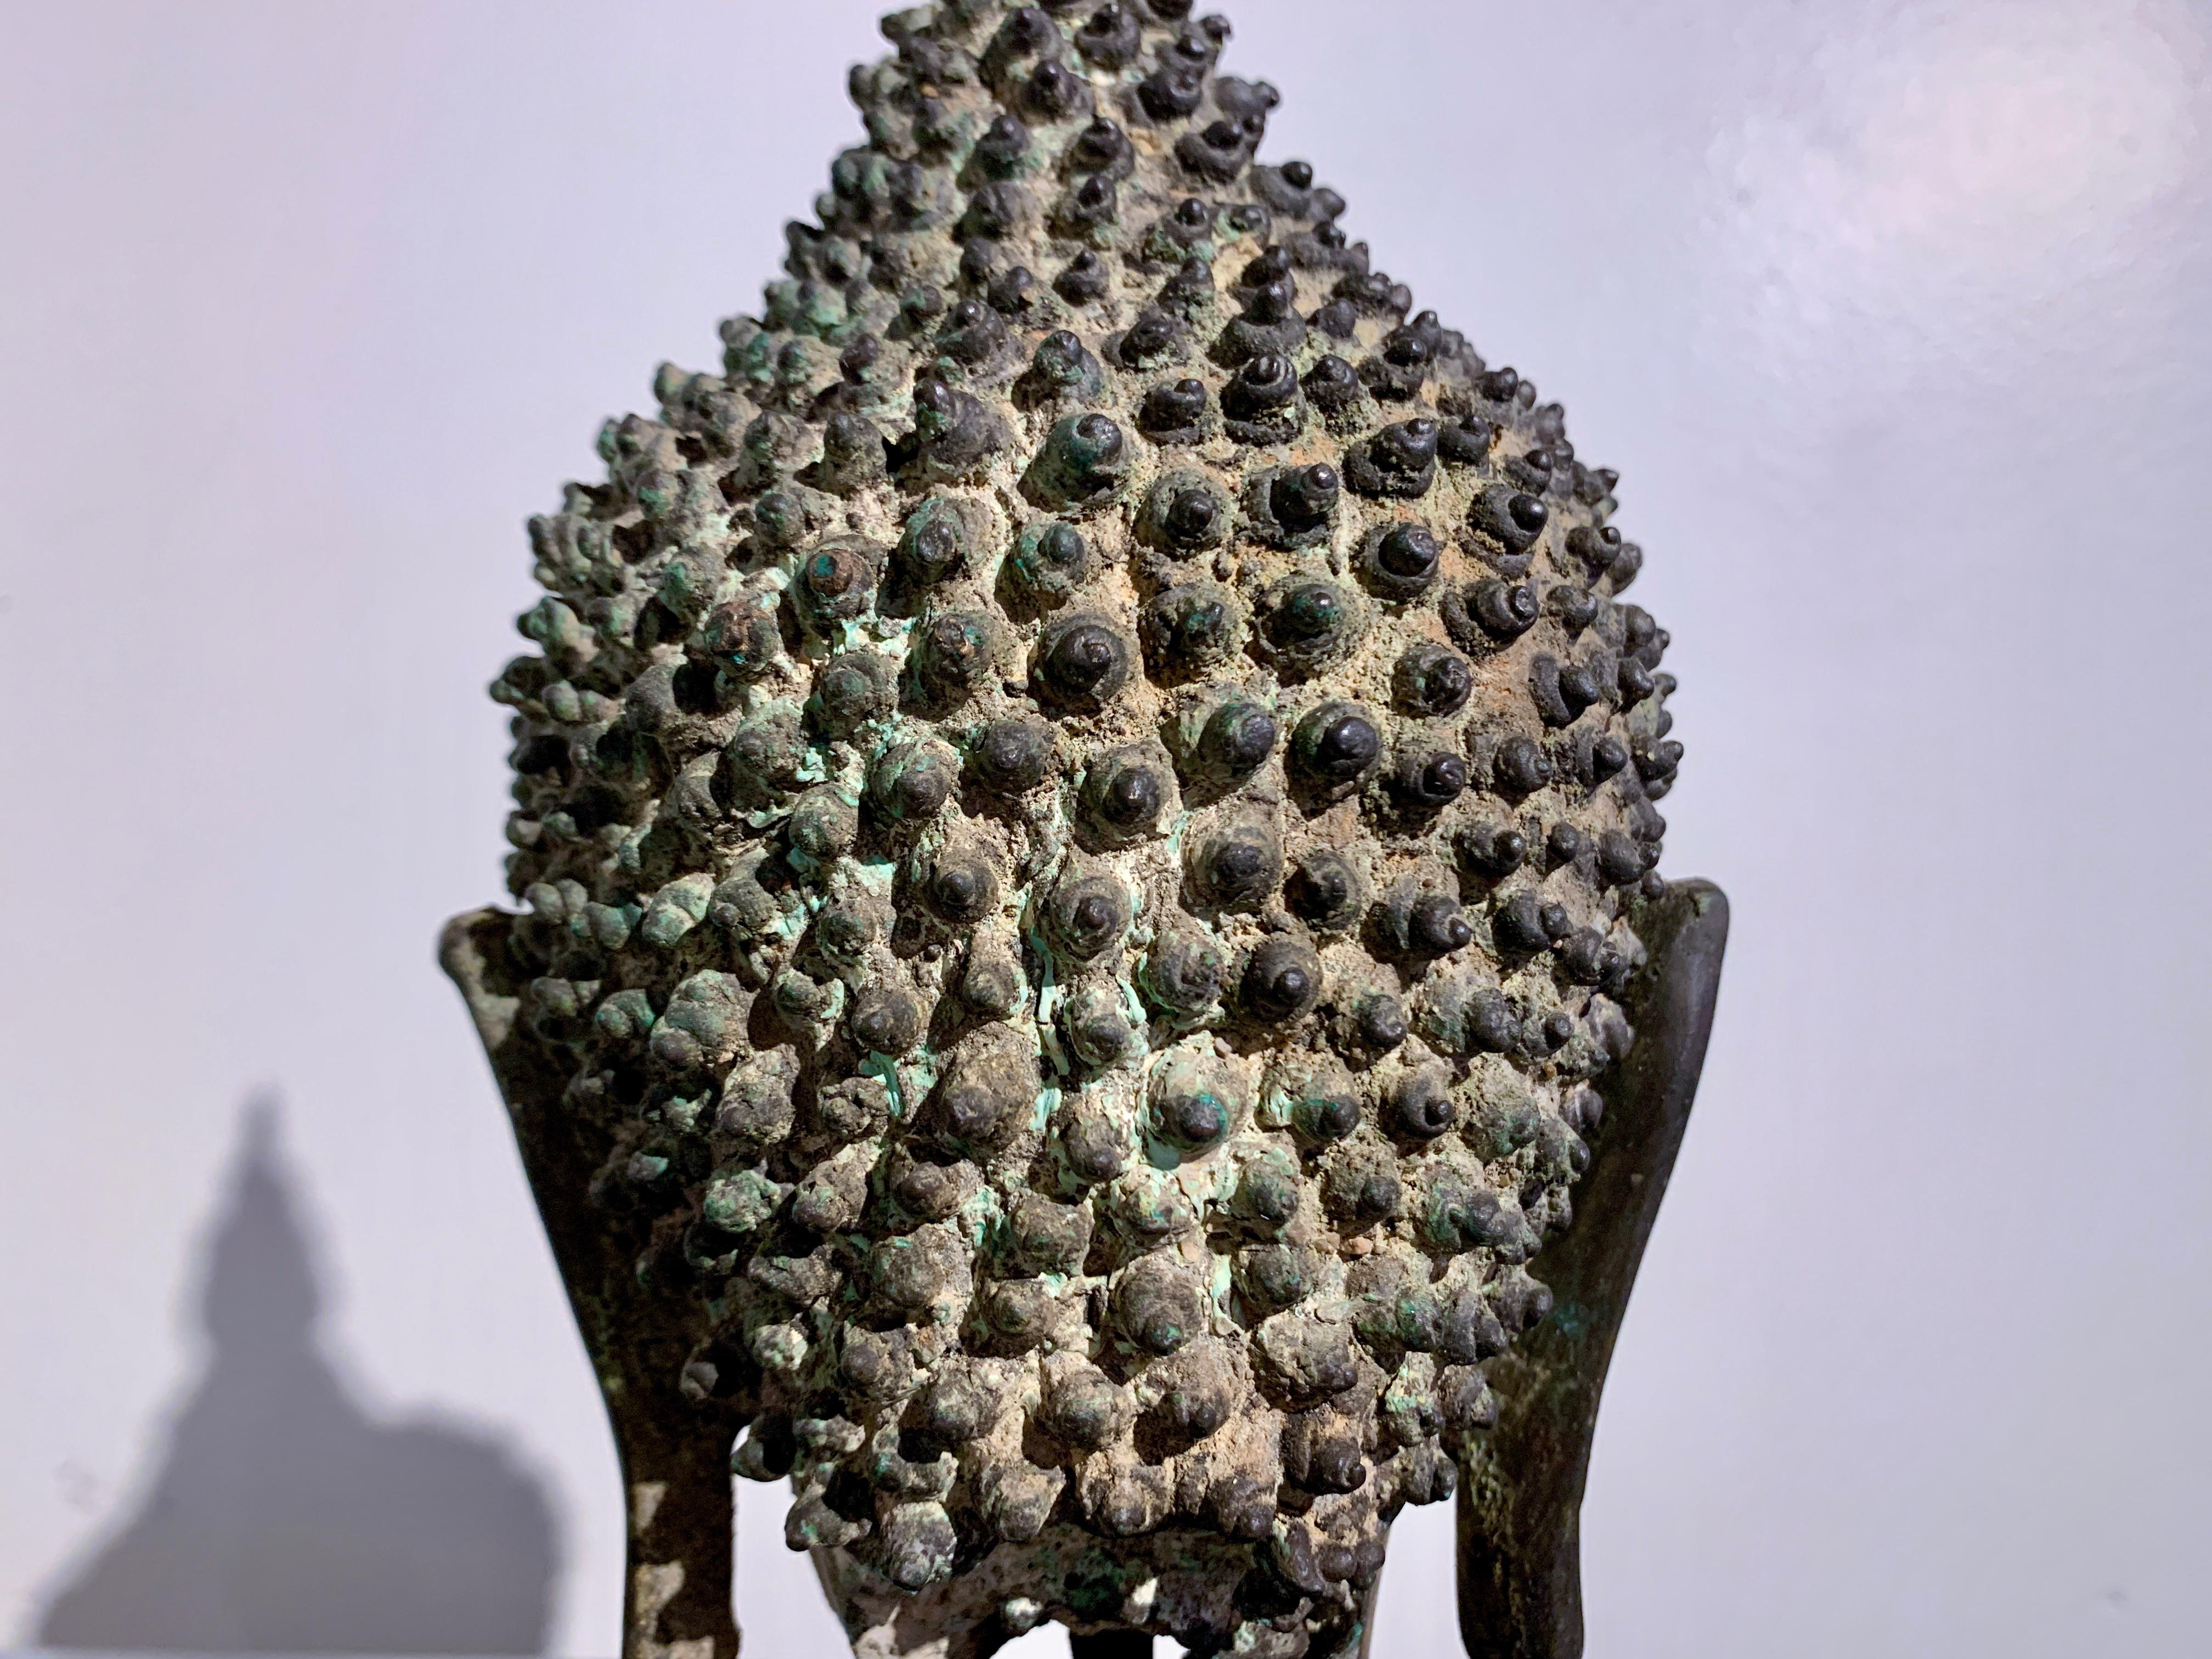 Thai Ayutthaya Bronze Buddha Head, U-Thong C Style, 18th/19th Century, Thailand For Sale 5